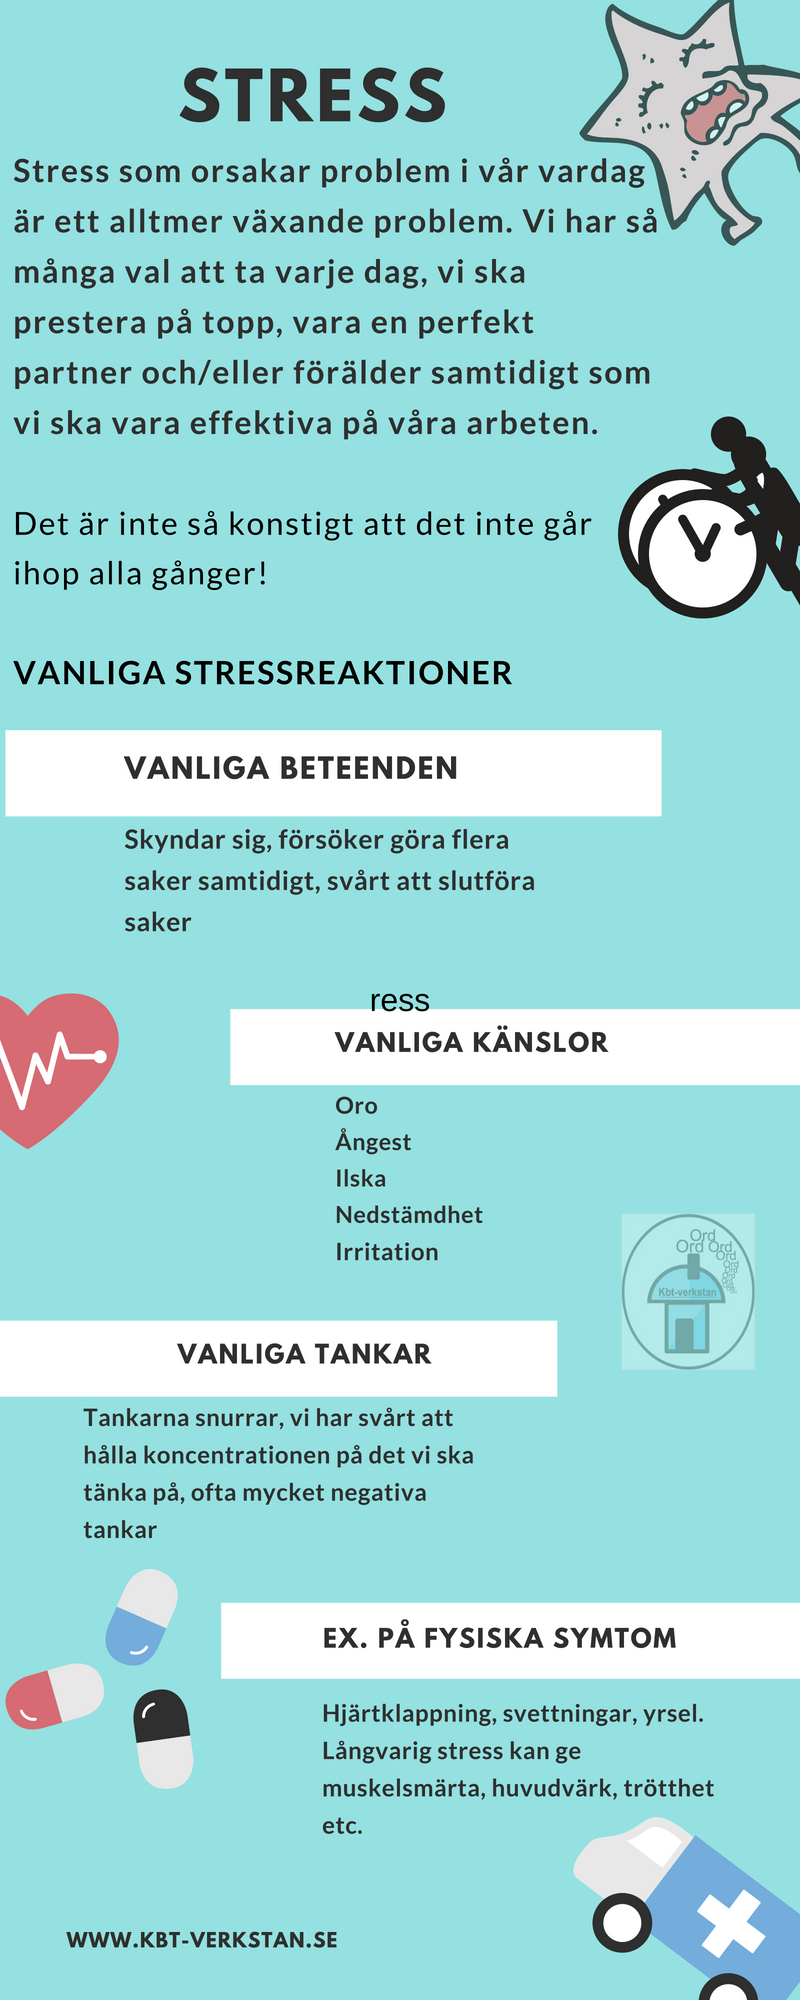 Vanliga symtom vid stress. www.kbt-verkstan.se